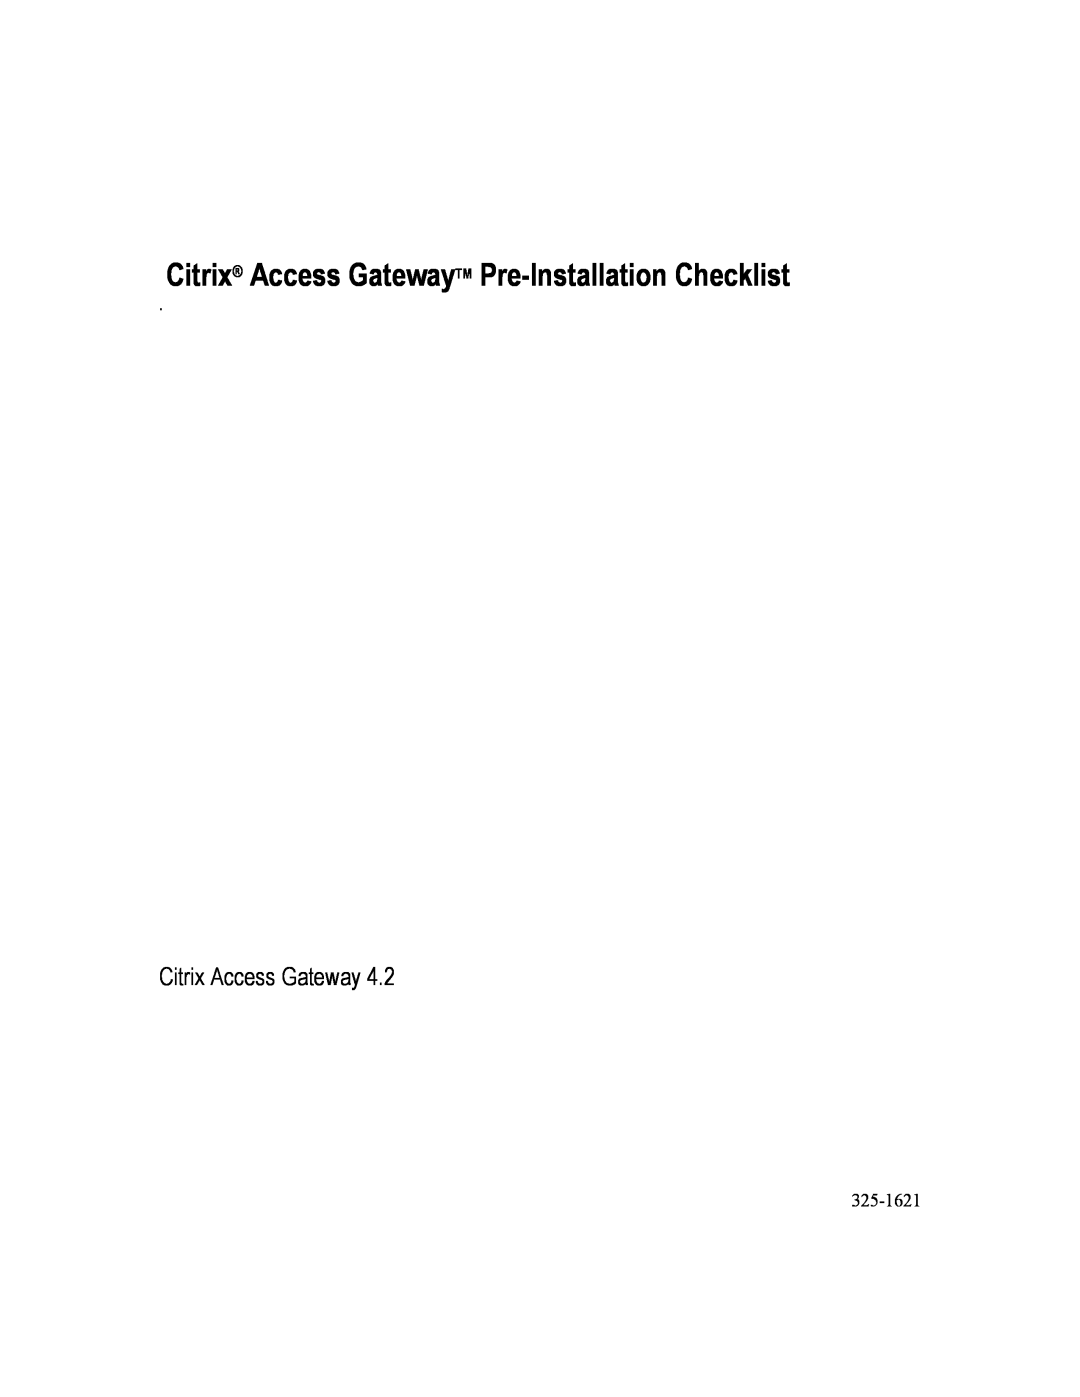 Citrix Systems 4.2 manual Citrix Access GatewayTM Pre-Installation Checklist 